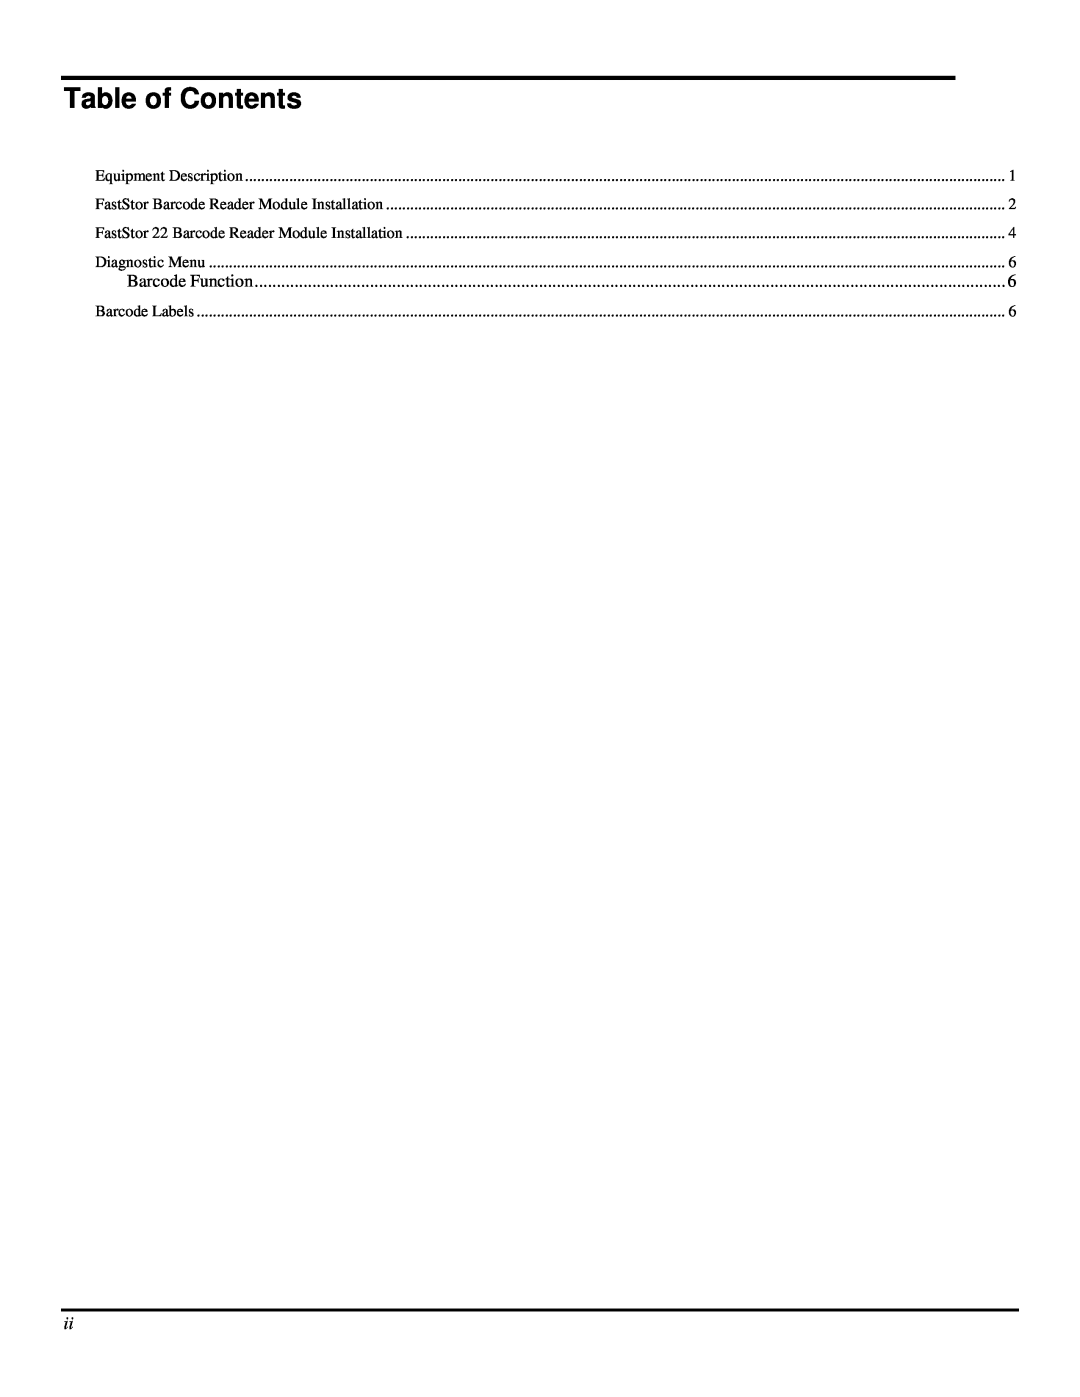 ADIC 22 manual Table of Contents, Equipment Description, FastStor Barcode Reader Module Installation, Diagnostic Menu 